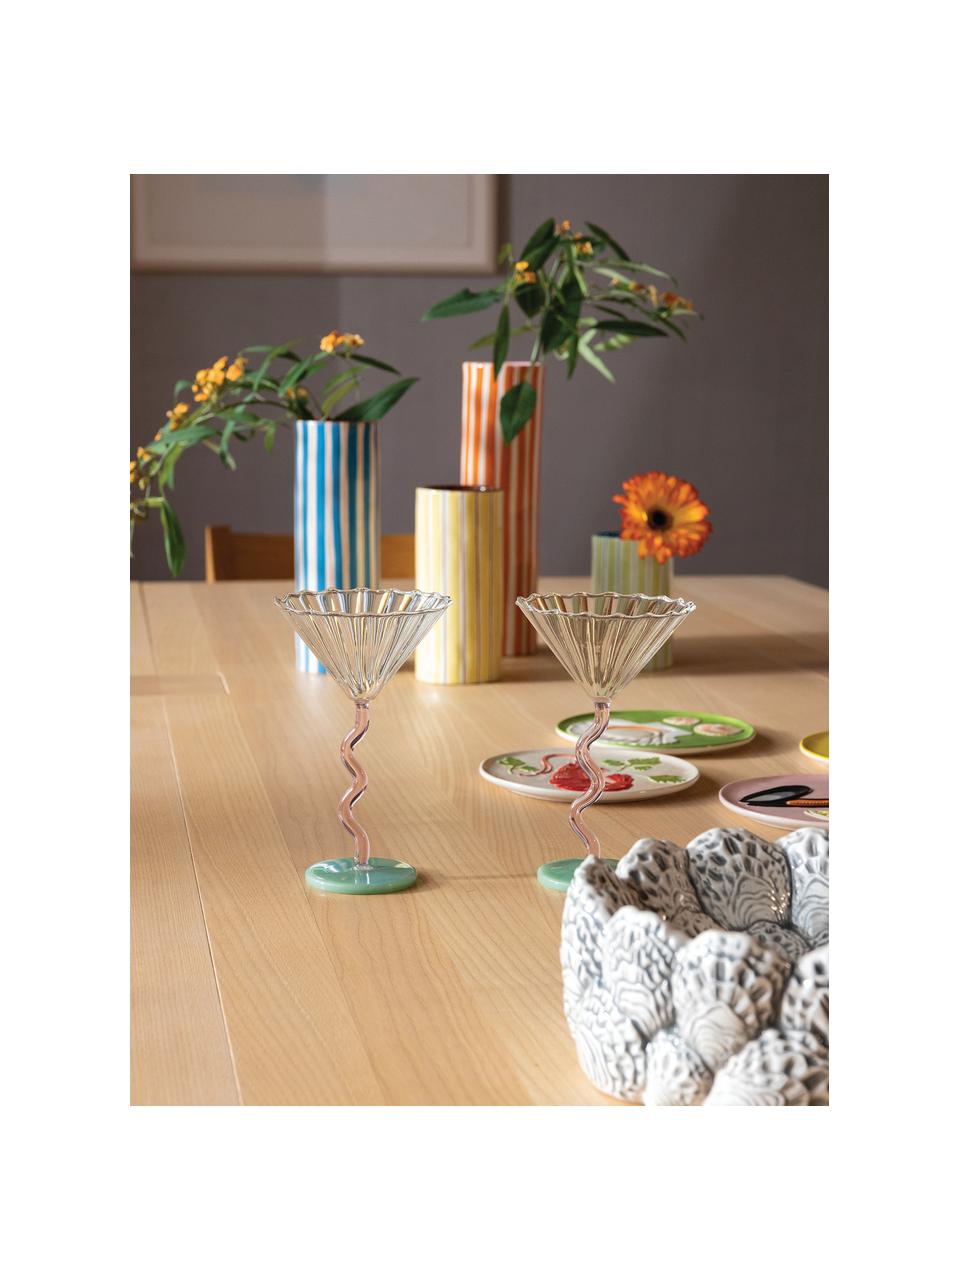 Handbemalte Vase Ray aus Porzellan, H 29 cm, Porzellan, Orange, Off White, Hellrosa, Ø 8 x H 29 cm